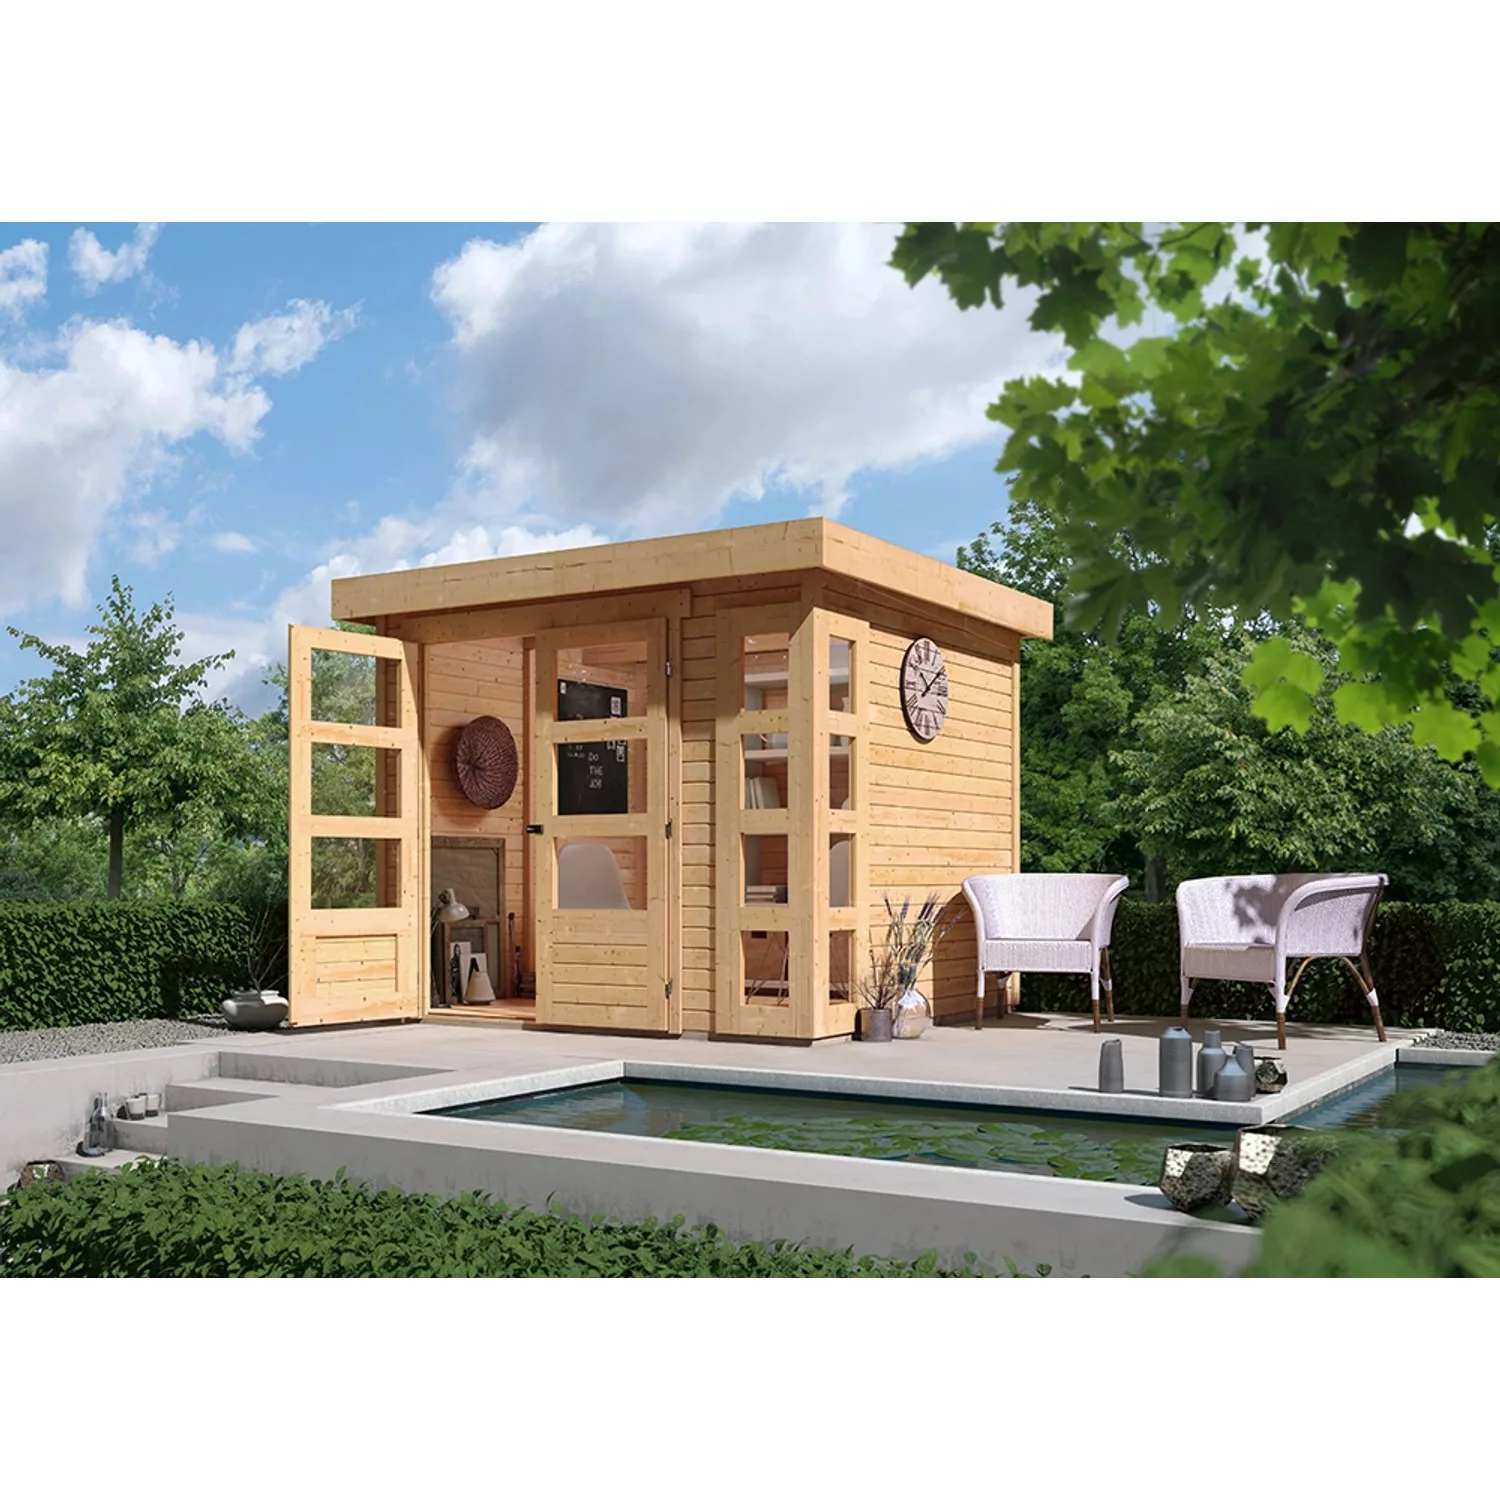 Karibu Holz-Gartenhaus Sölve Natur Flachdach Unbehandelt 238 cm x 213 cm günstig online kaufen